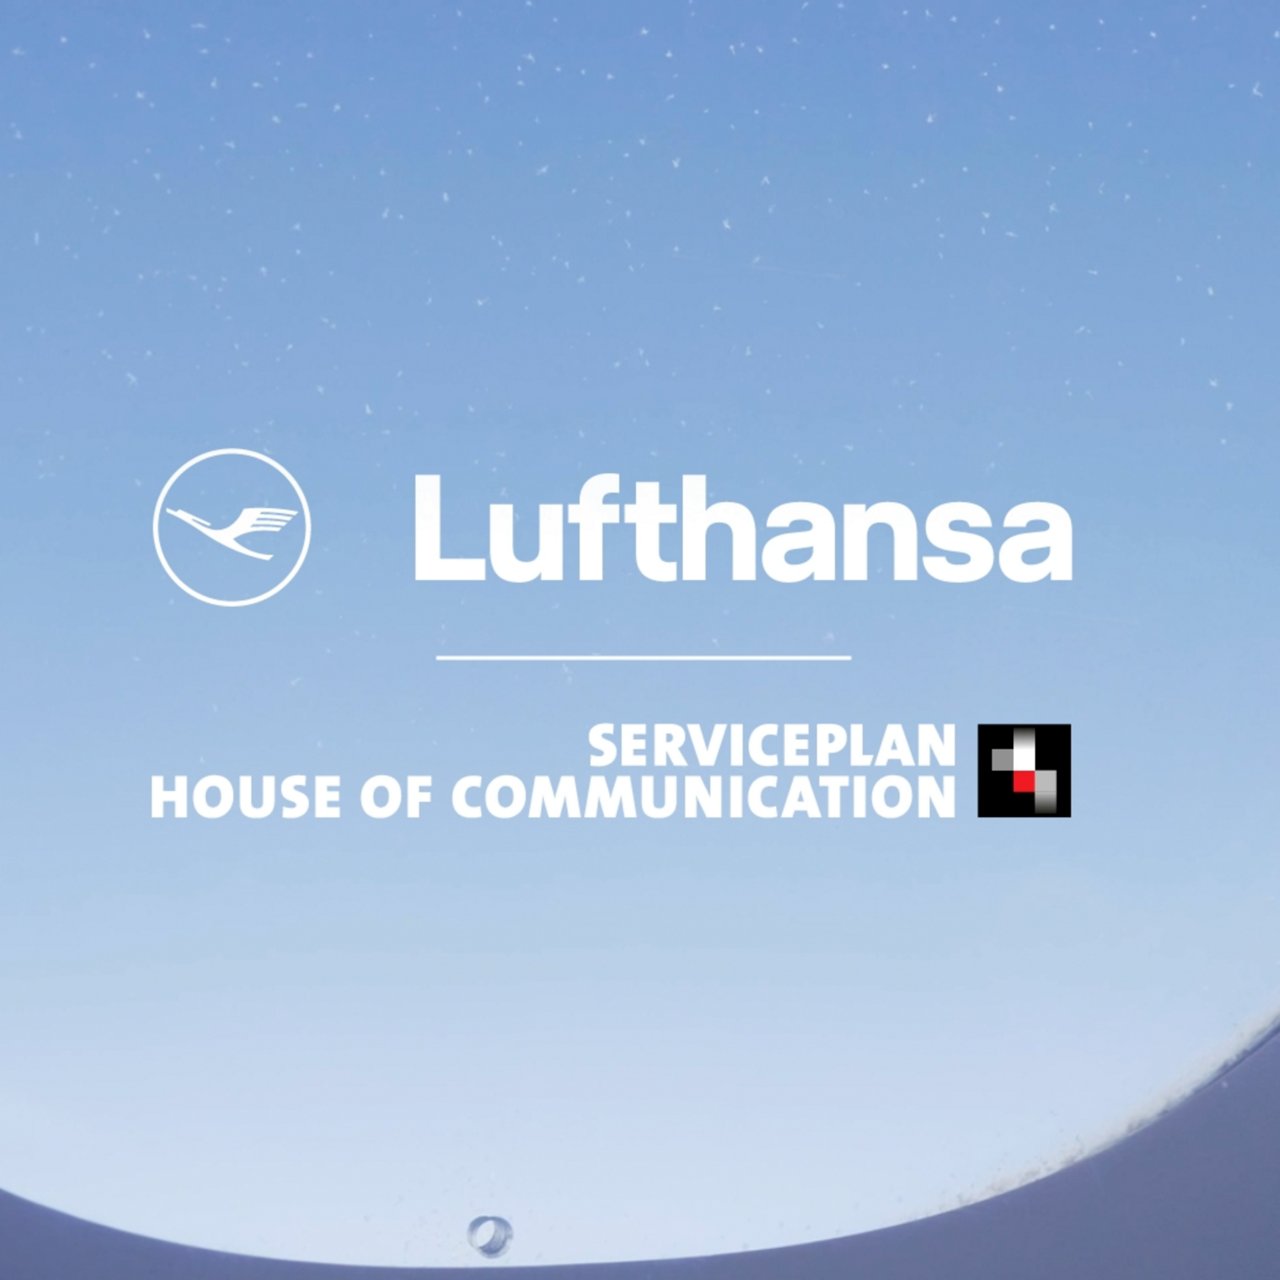 Lufthansa x Serviceplan